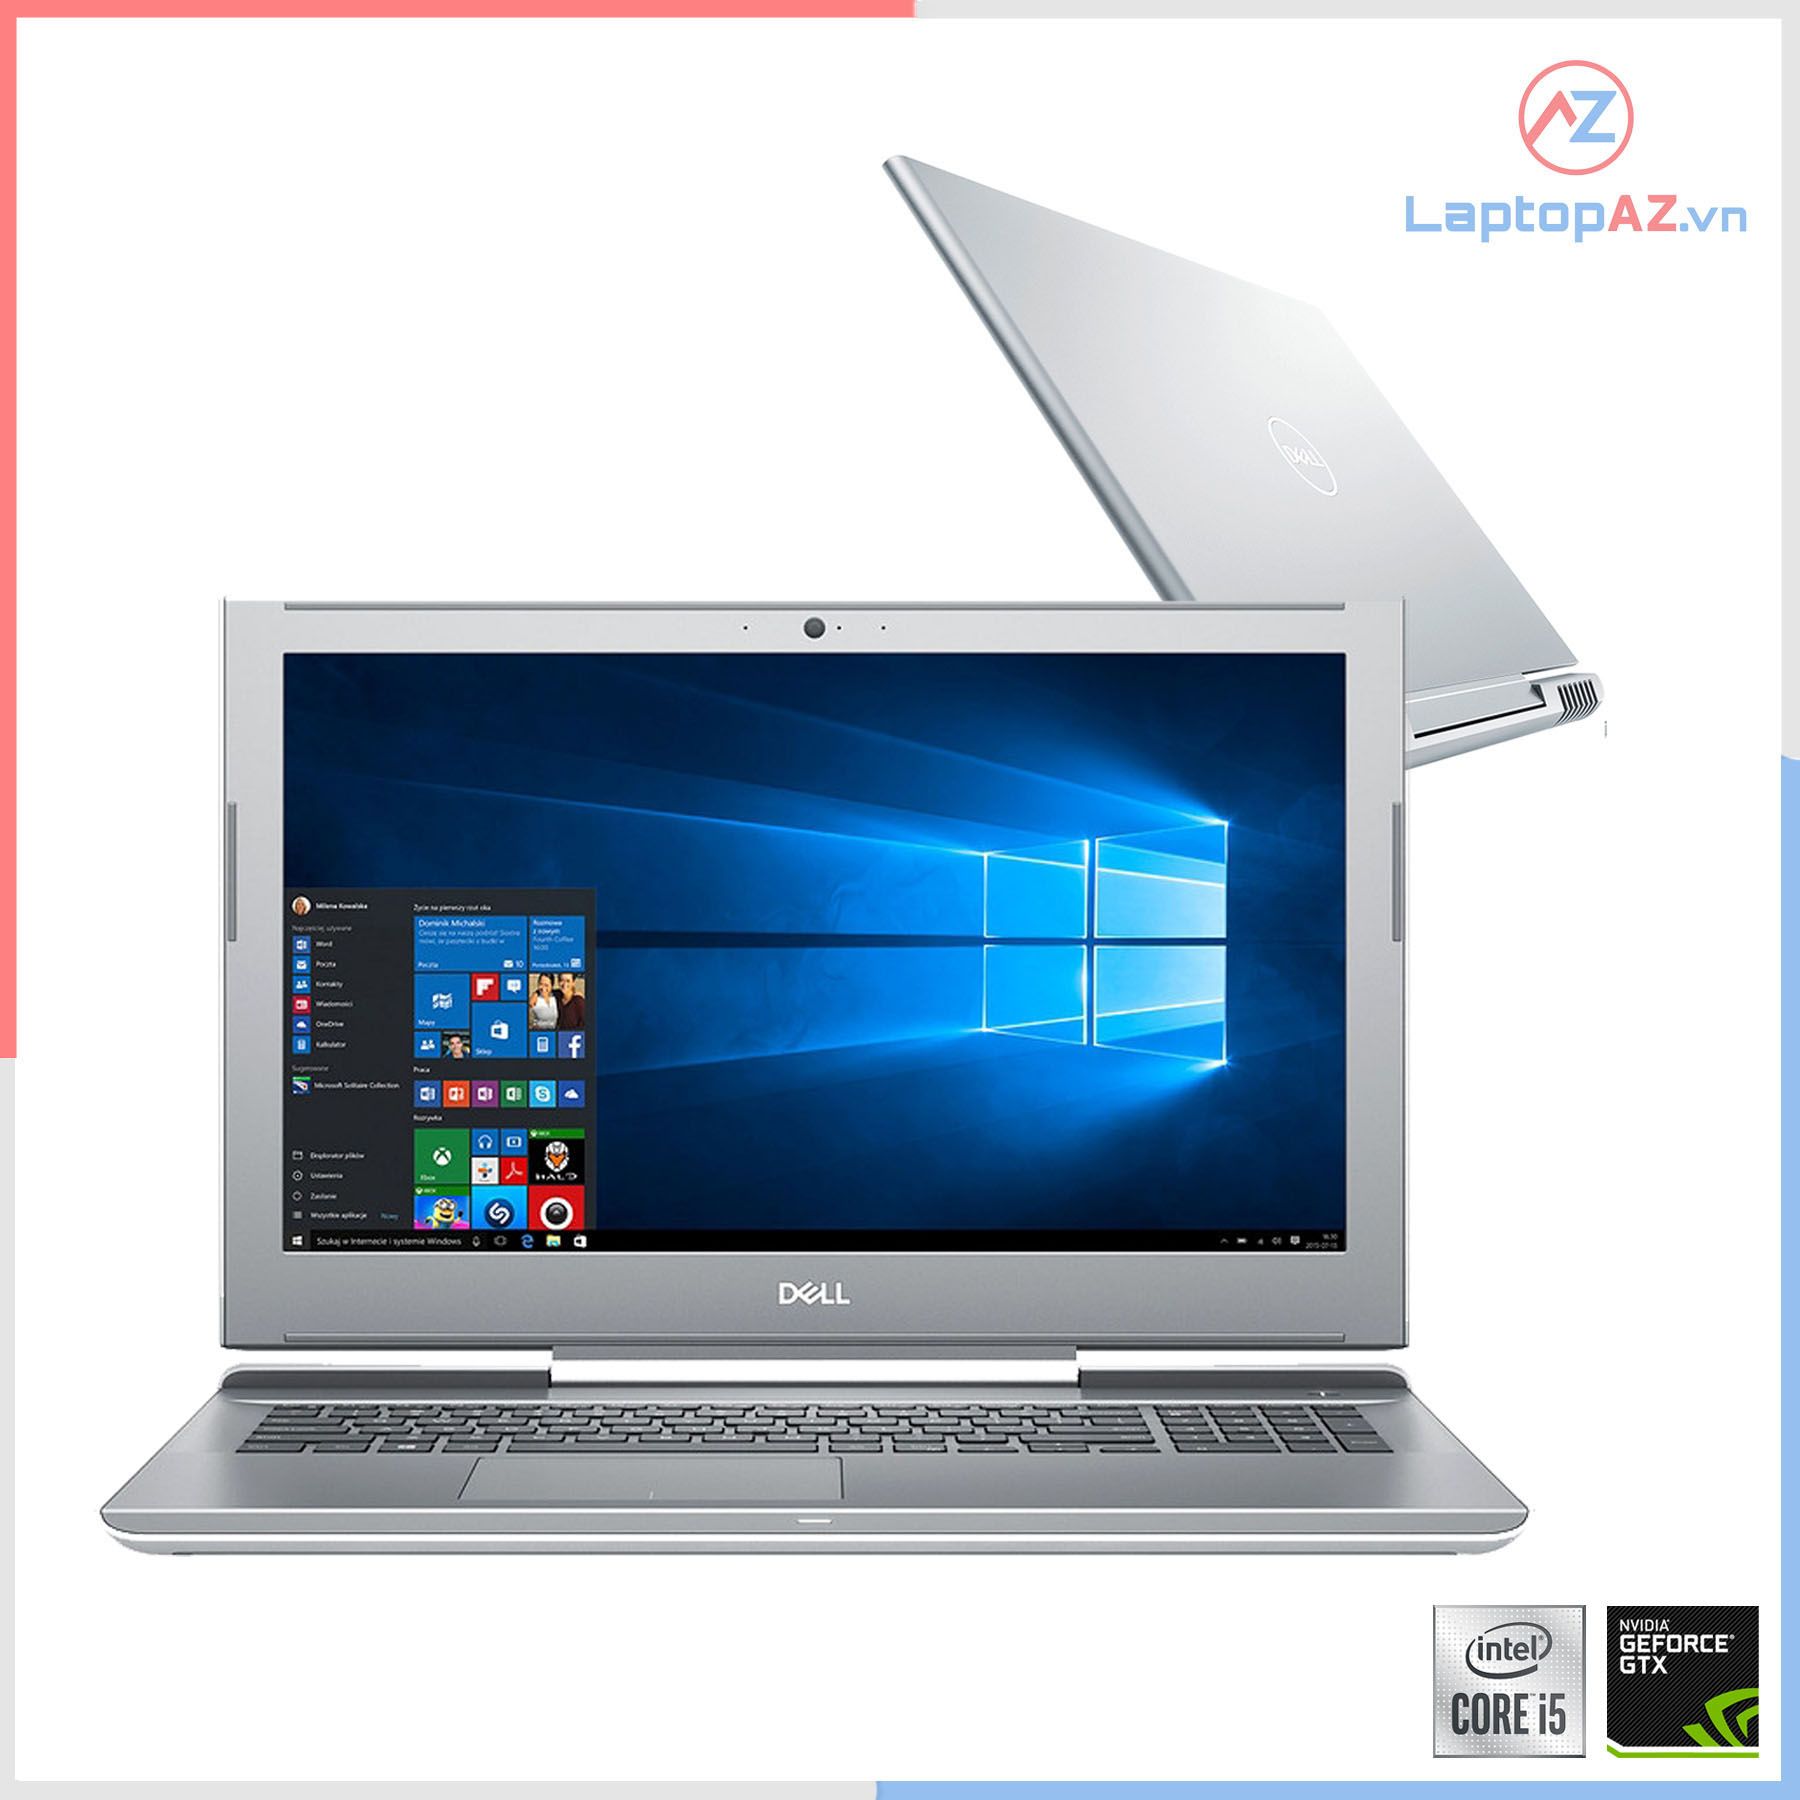 Laptop Dell Vostro V7570 (Core i5-7300HQ, 8GB, 1TB, VGA 4GB NVIDIA GeForce GTX 1050, 15.6 inch FHD IPS)